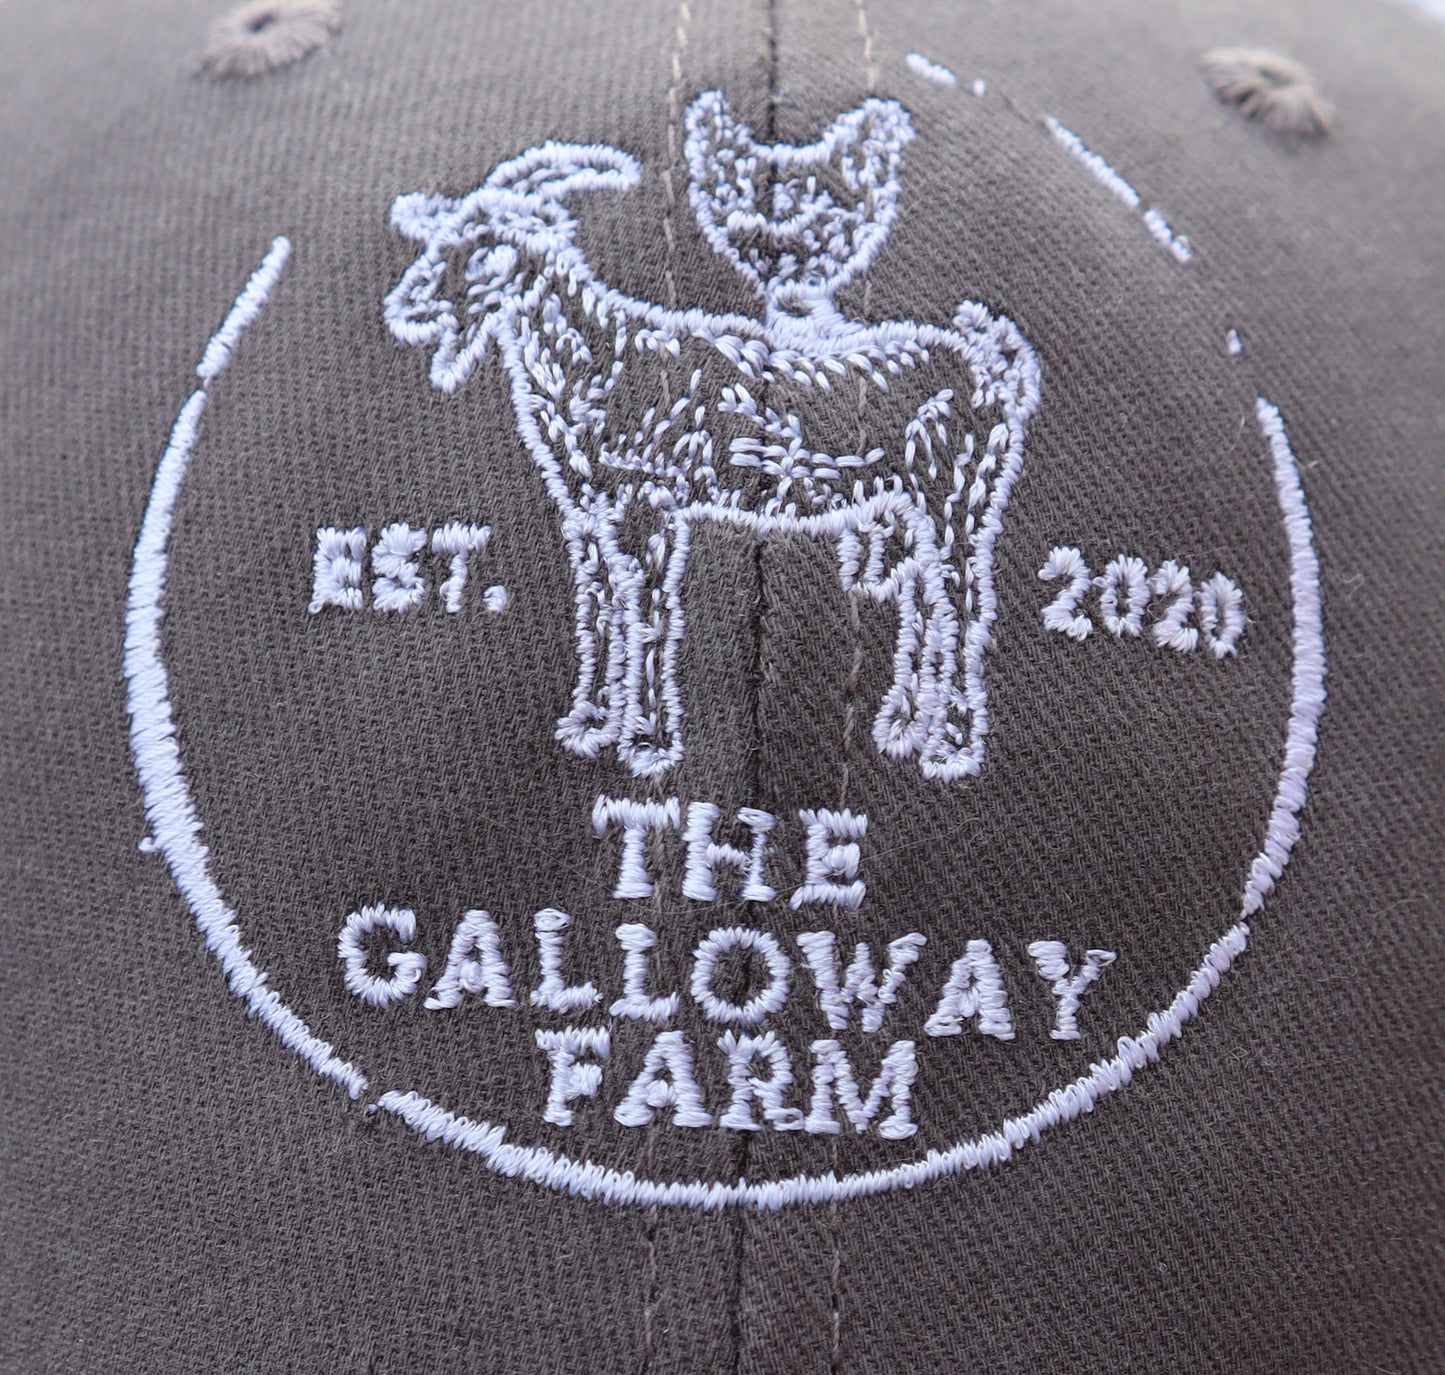 The Galloway Farm Logo Hat